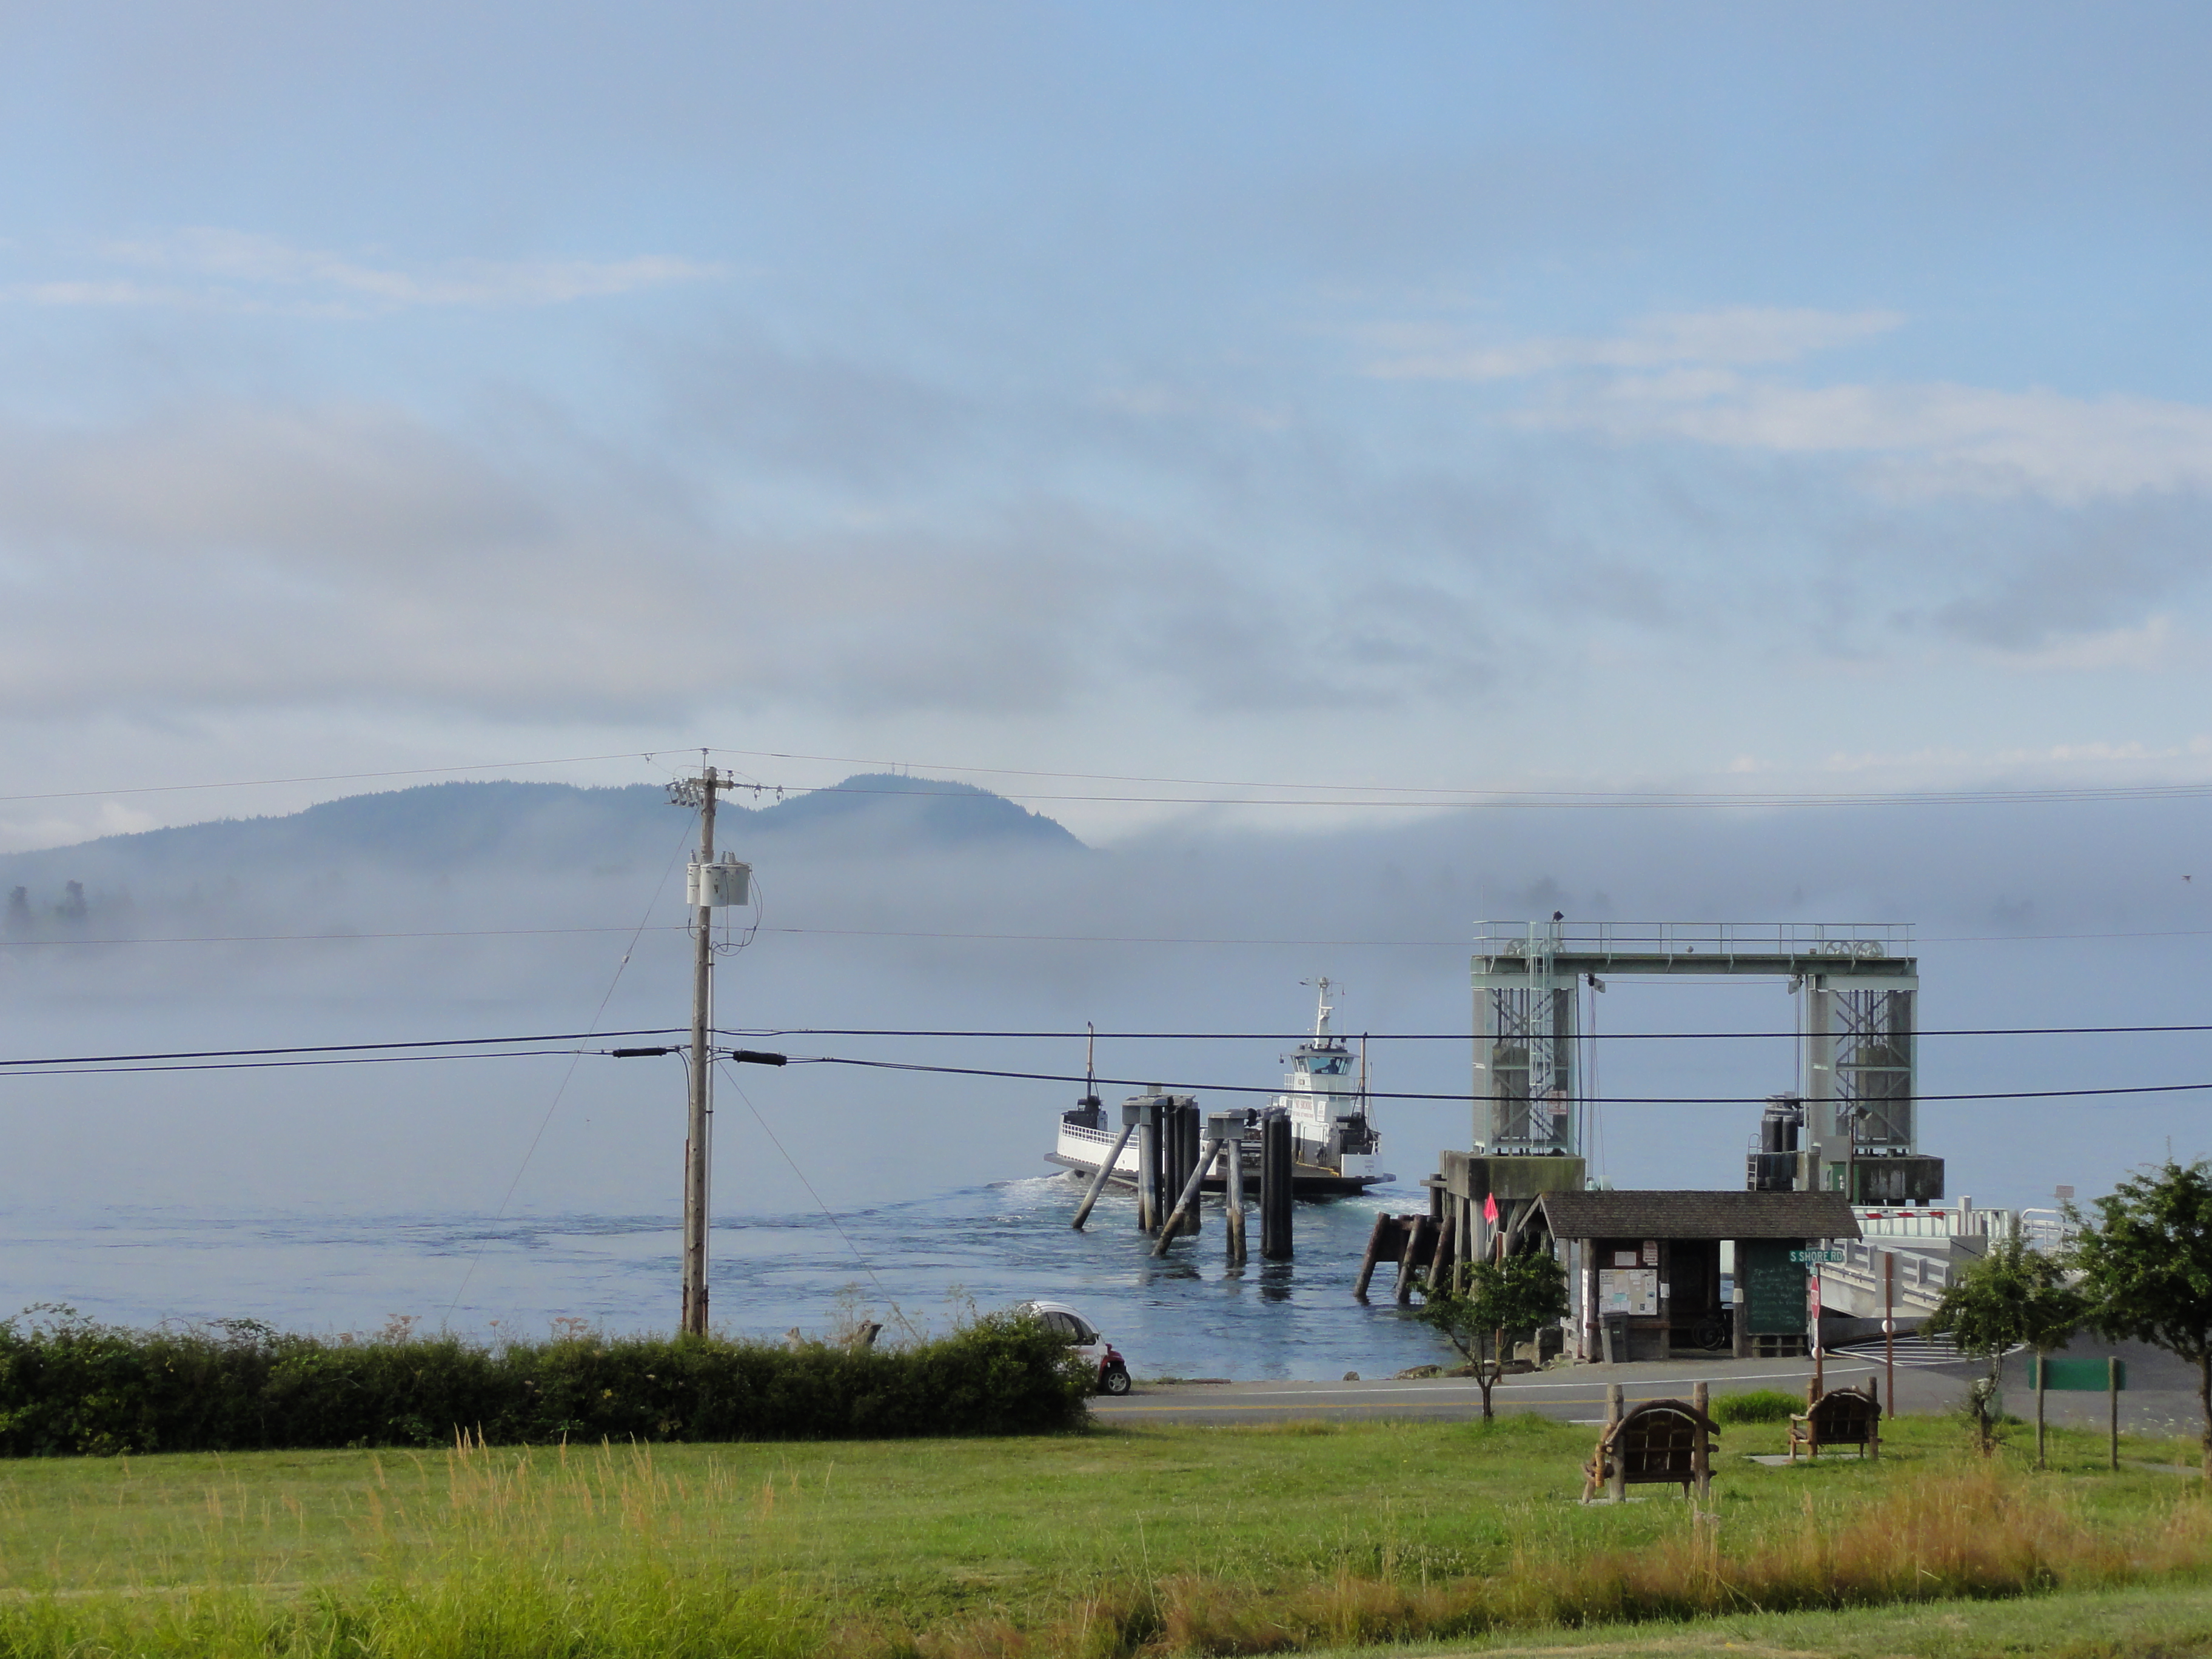 Guemes Island Ferry Terminal. Photograph credit: Skagit Land Trust staff.